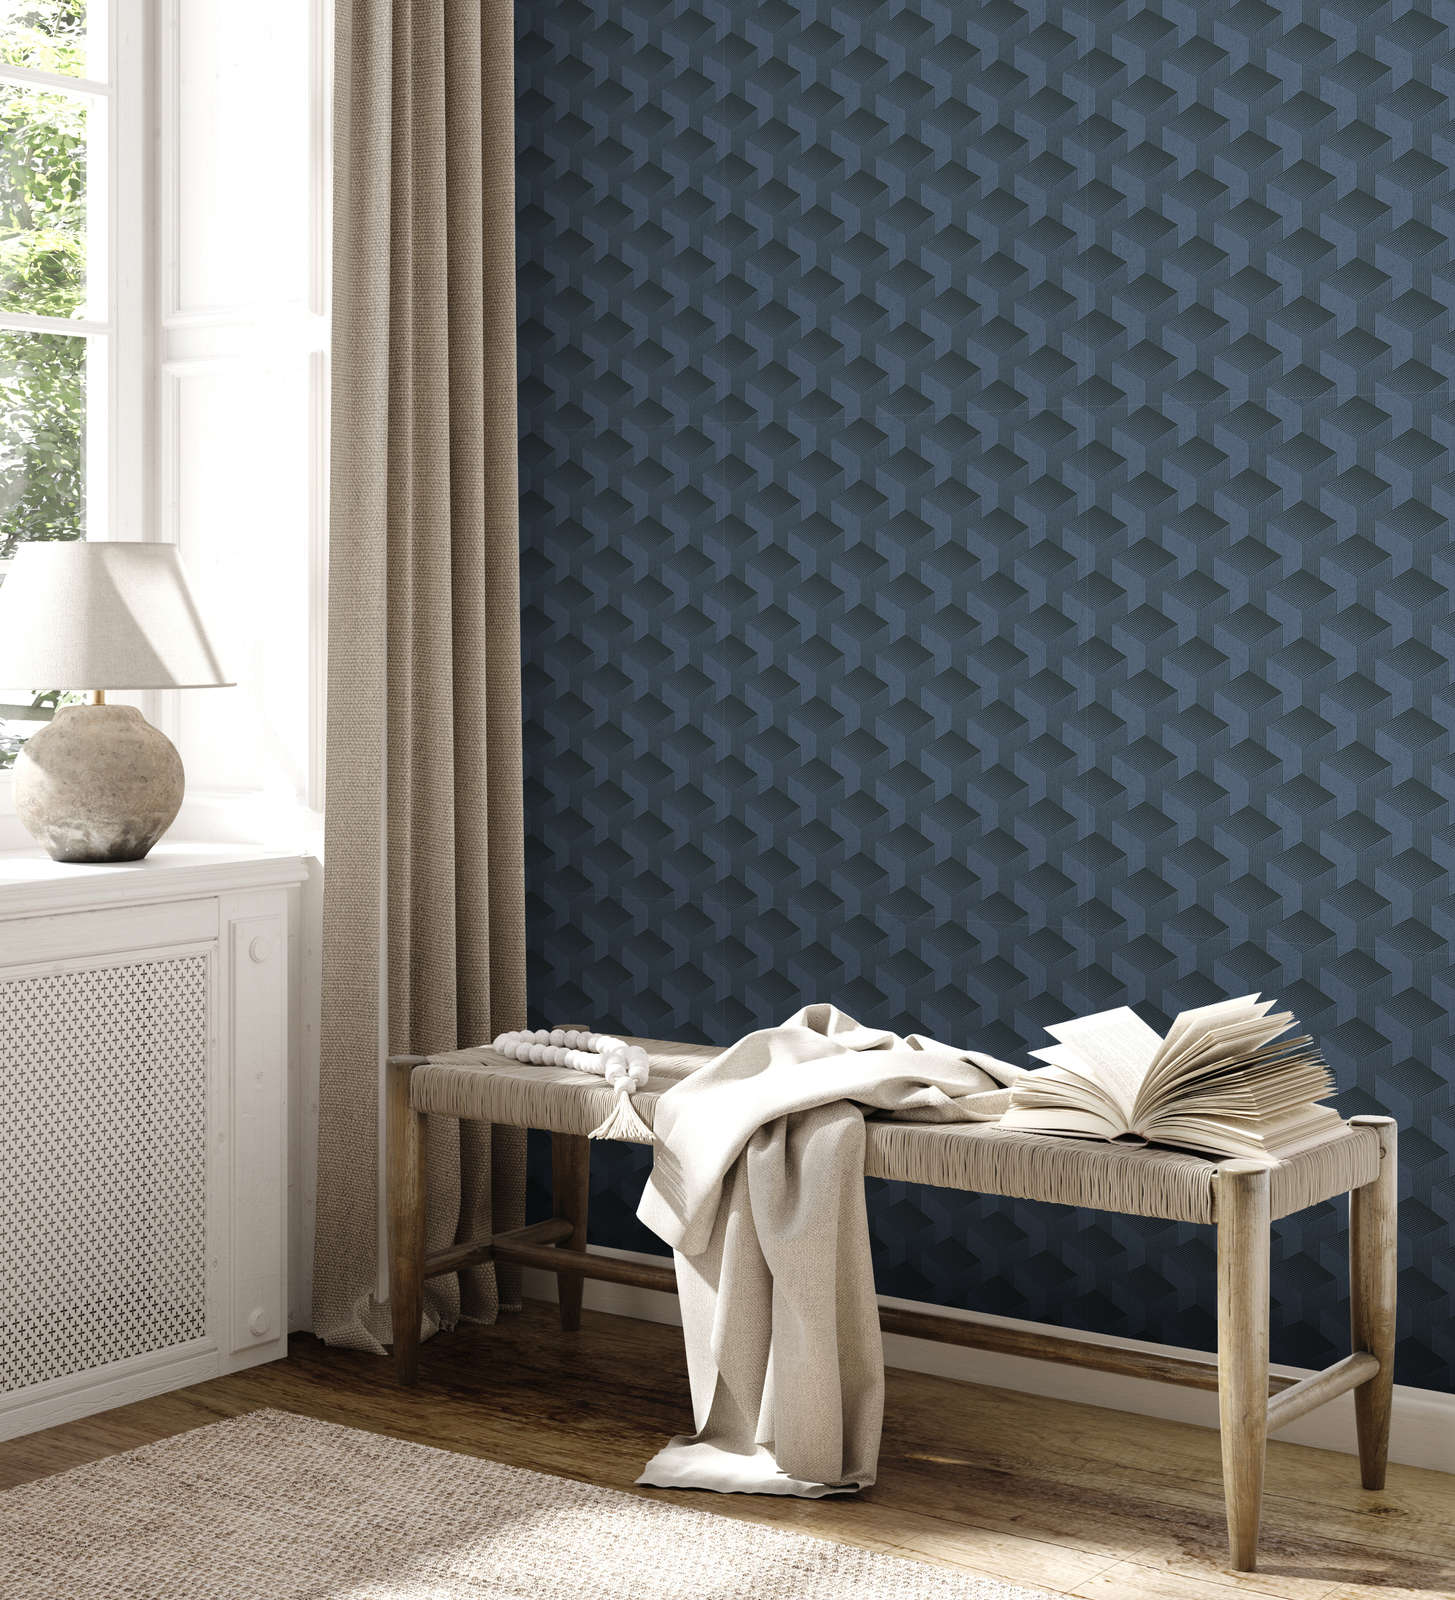             Graphic wallpaper with pattern in 3D matt - blue, black
        